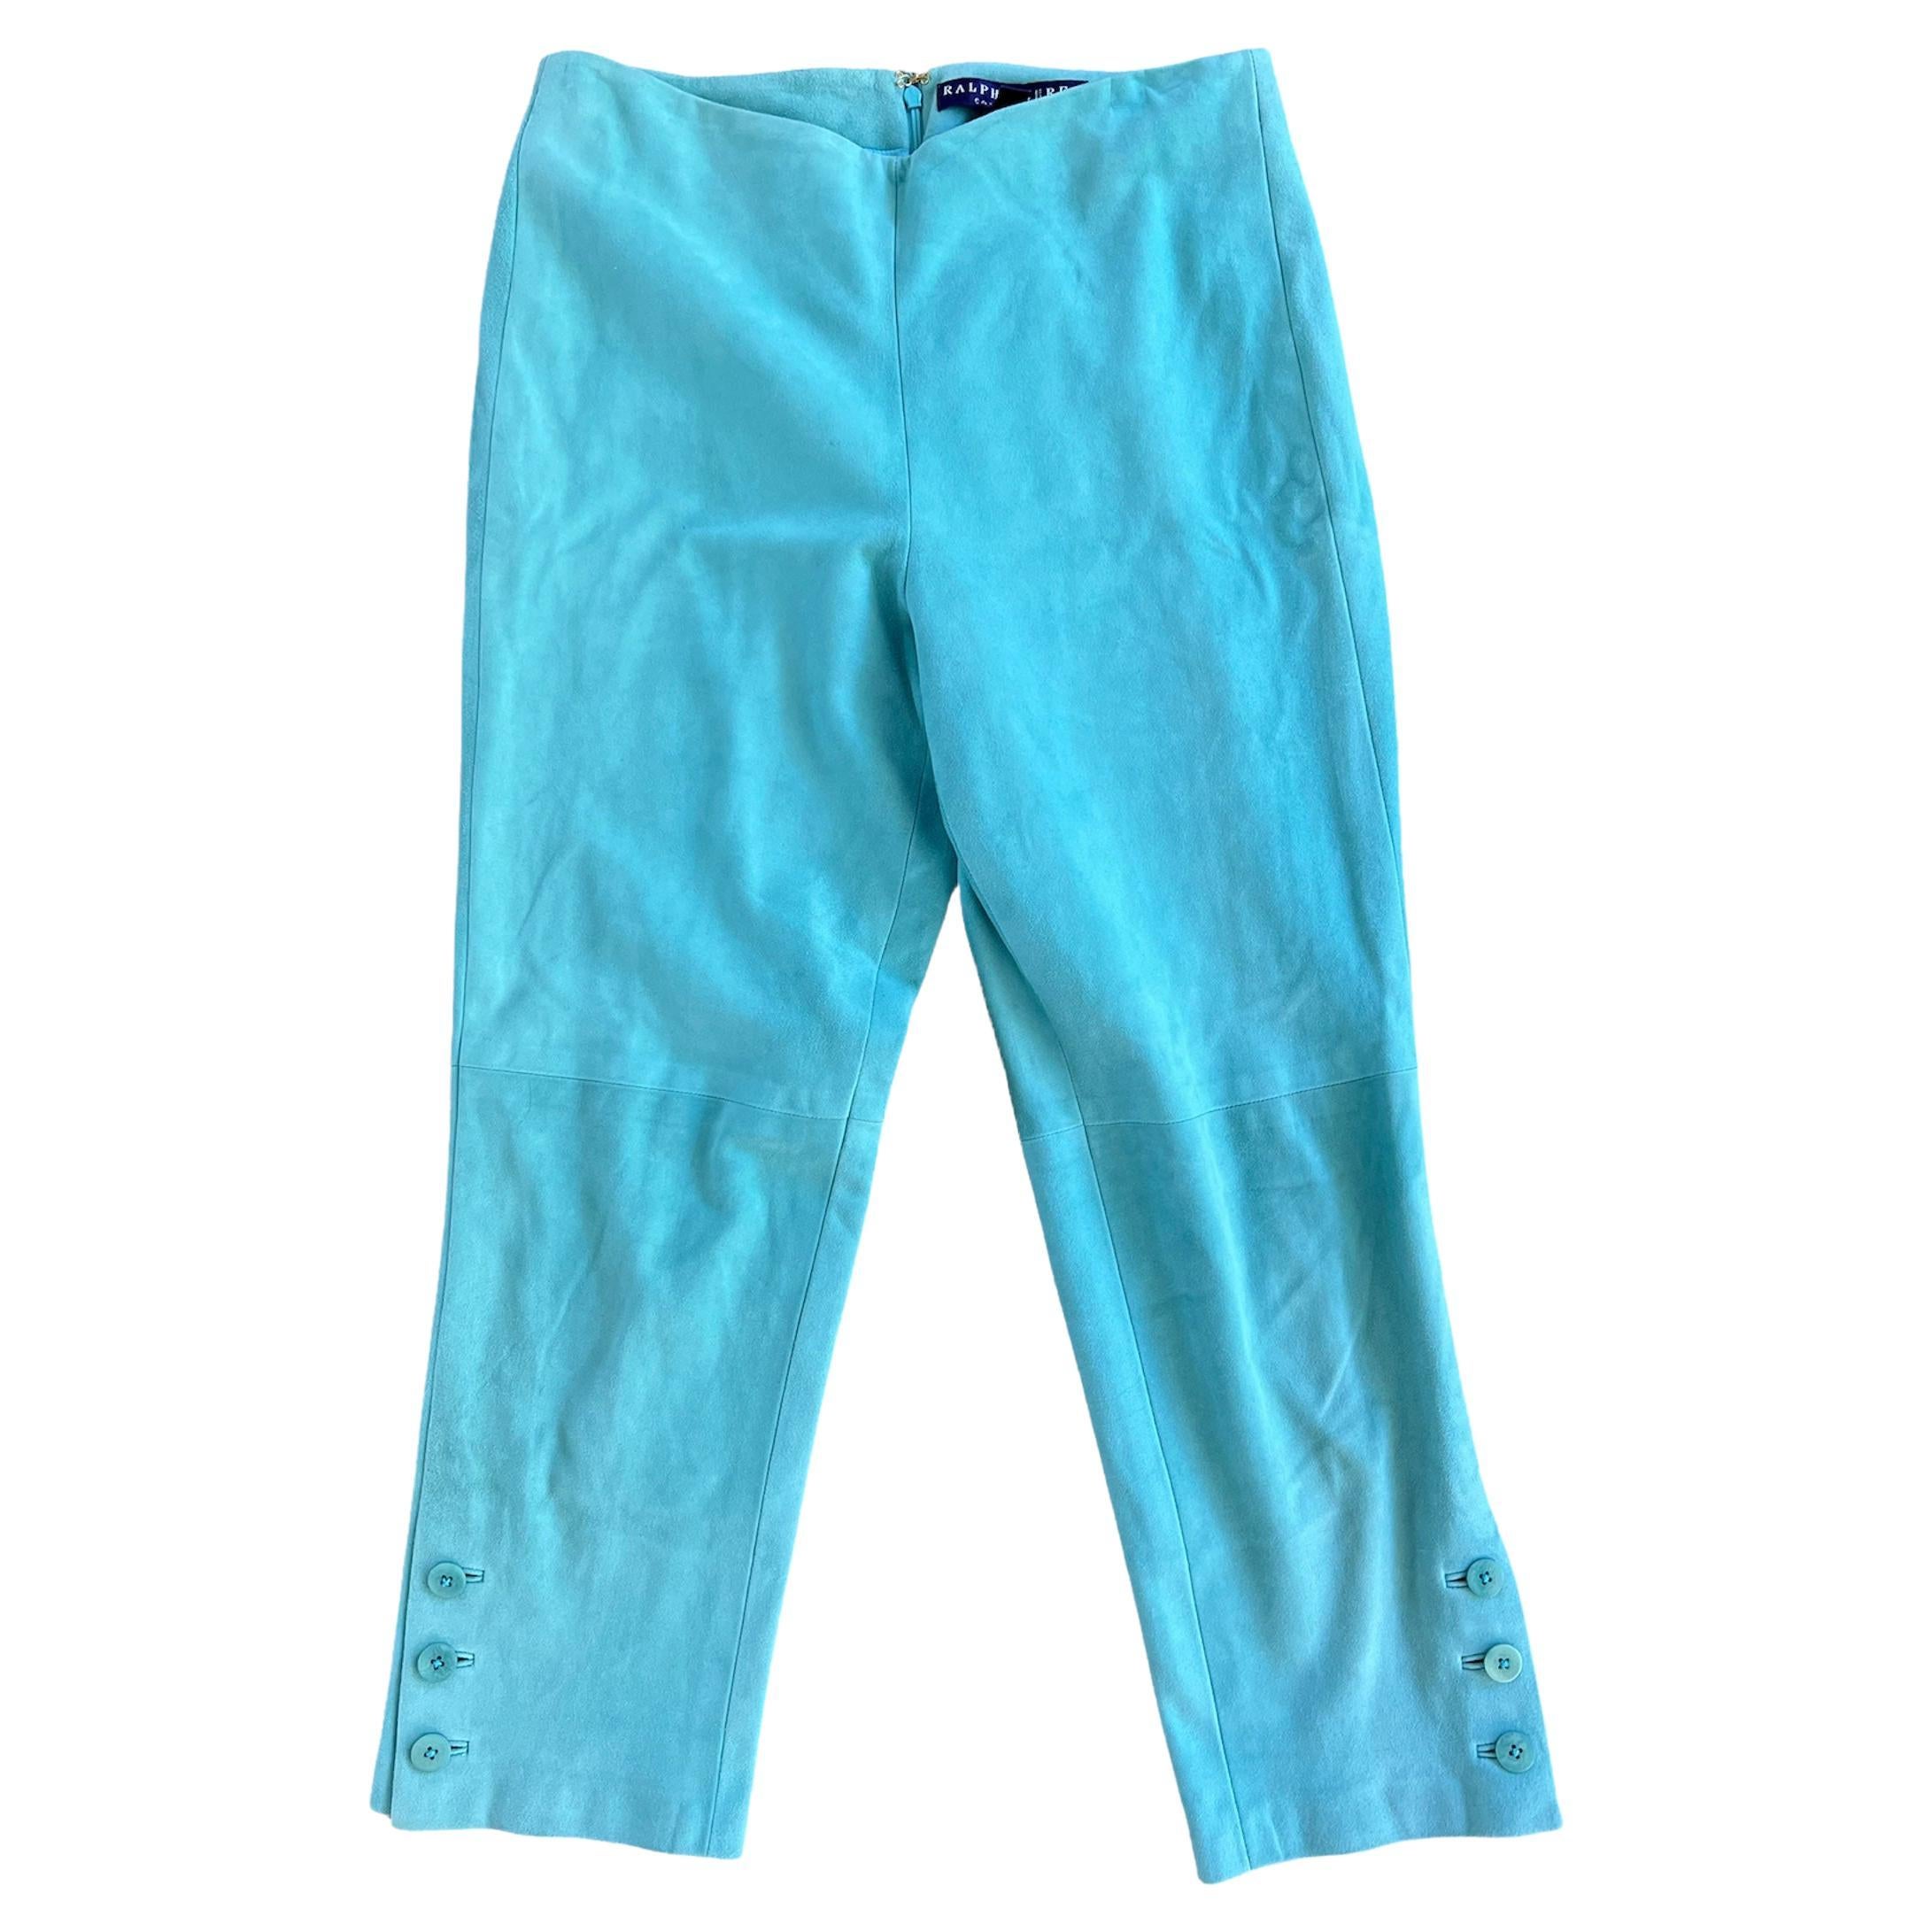 Ralph Lauren Turquoise Suede Capri Pants, Size 9